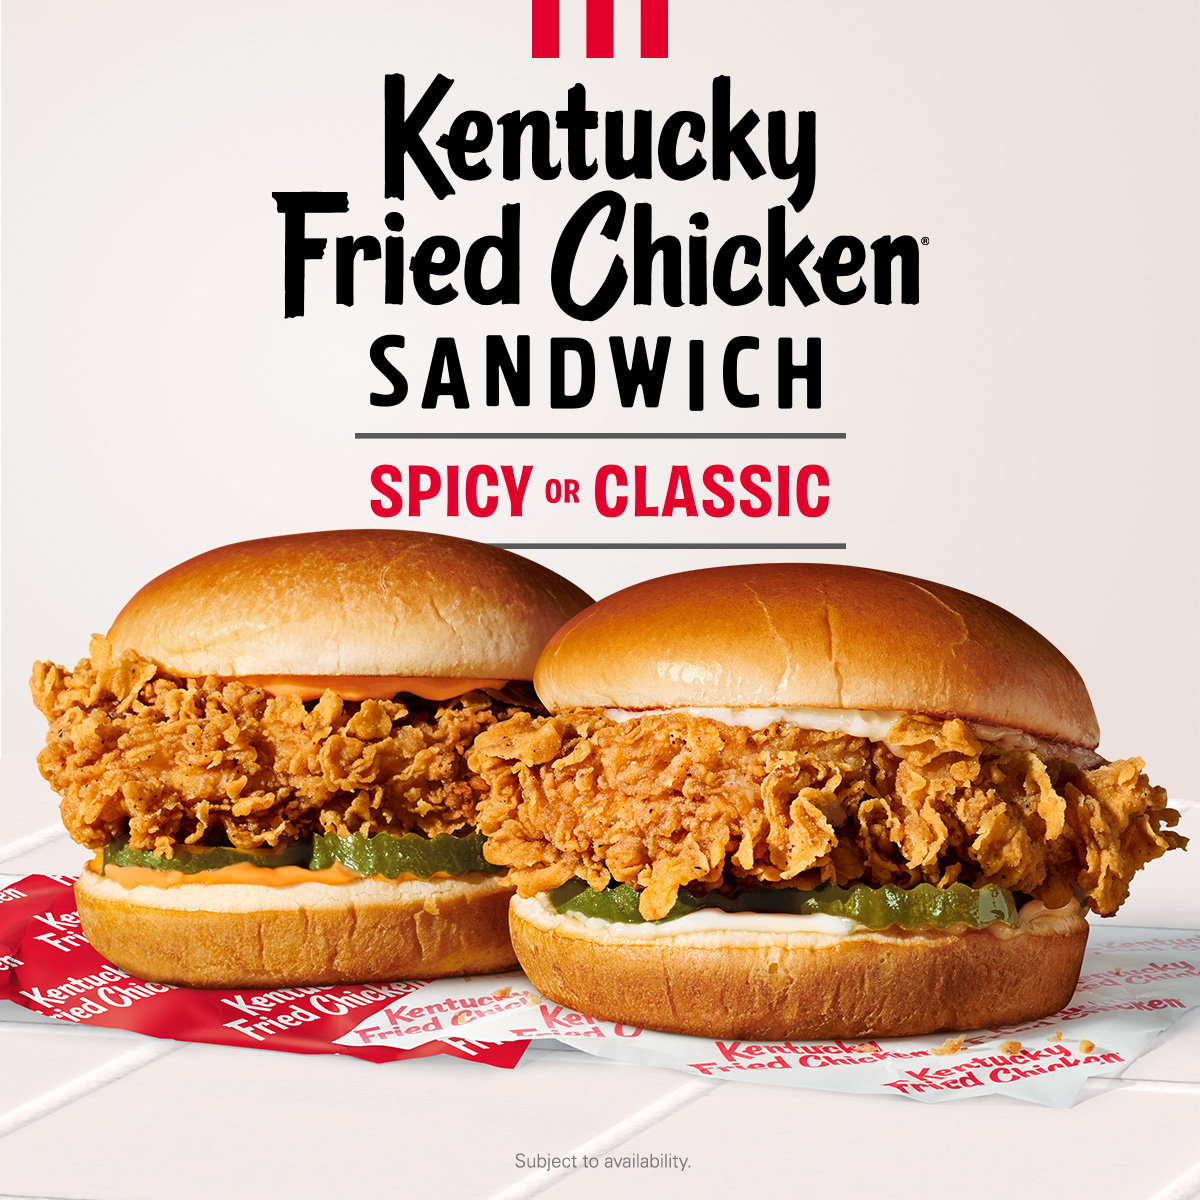 Kentucky Fried Chicken Sandwich